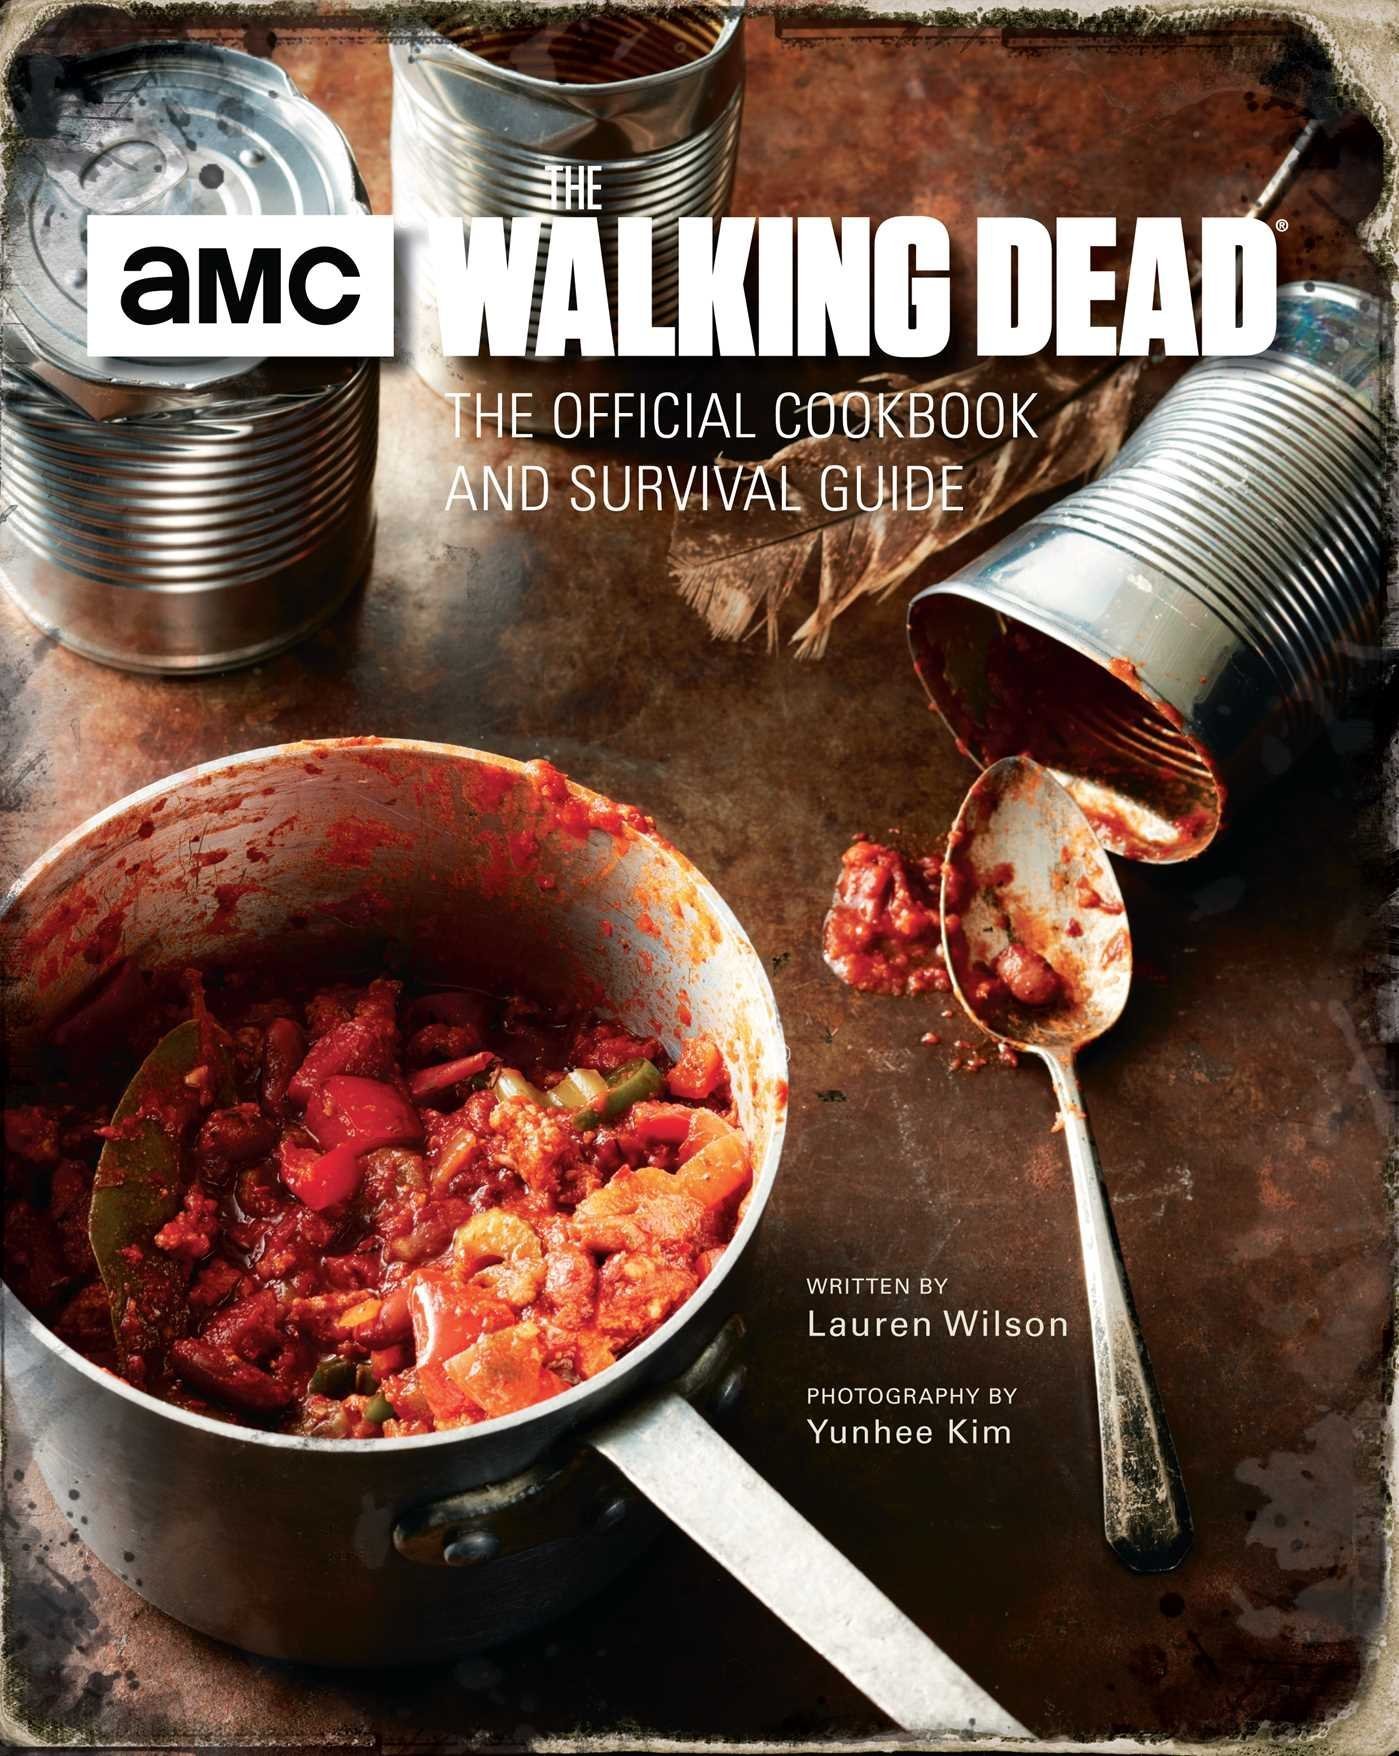 More information about "Lauren Wilson Interview - Walking Dead: Cookbook & Survival Guide"